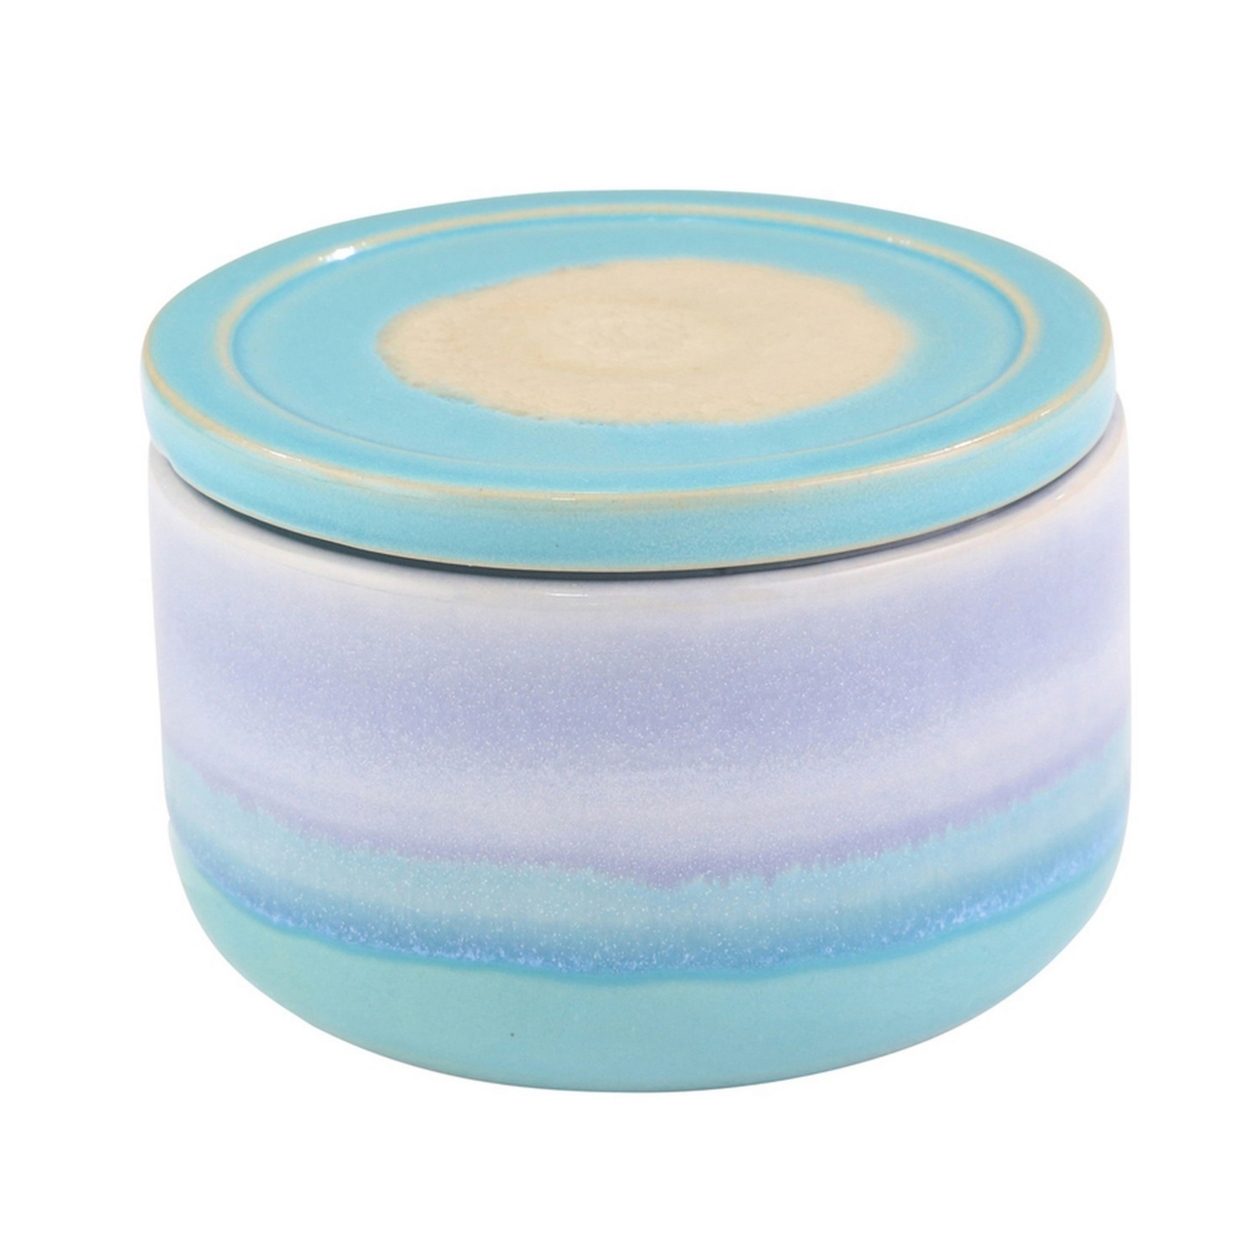 Storage Jar With Round Ceramic Shape And Lid, Blue- Saltoro Sherpi